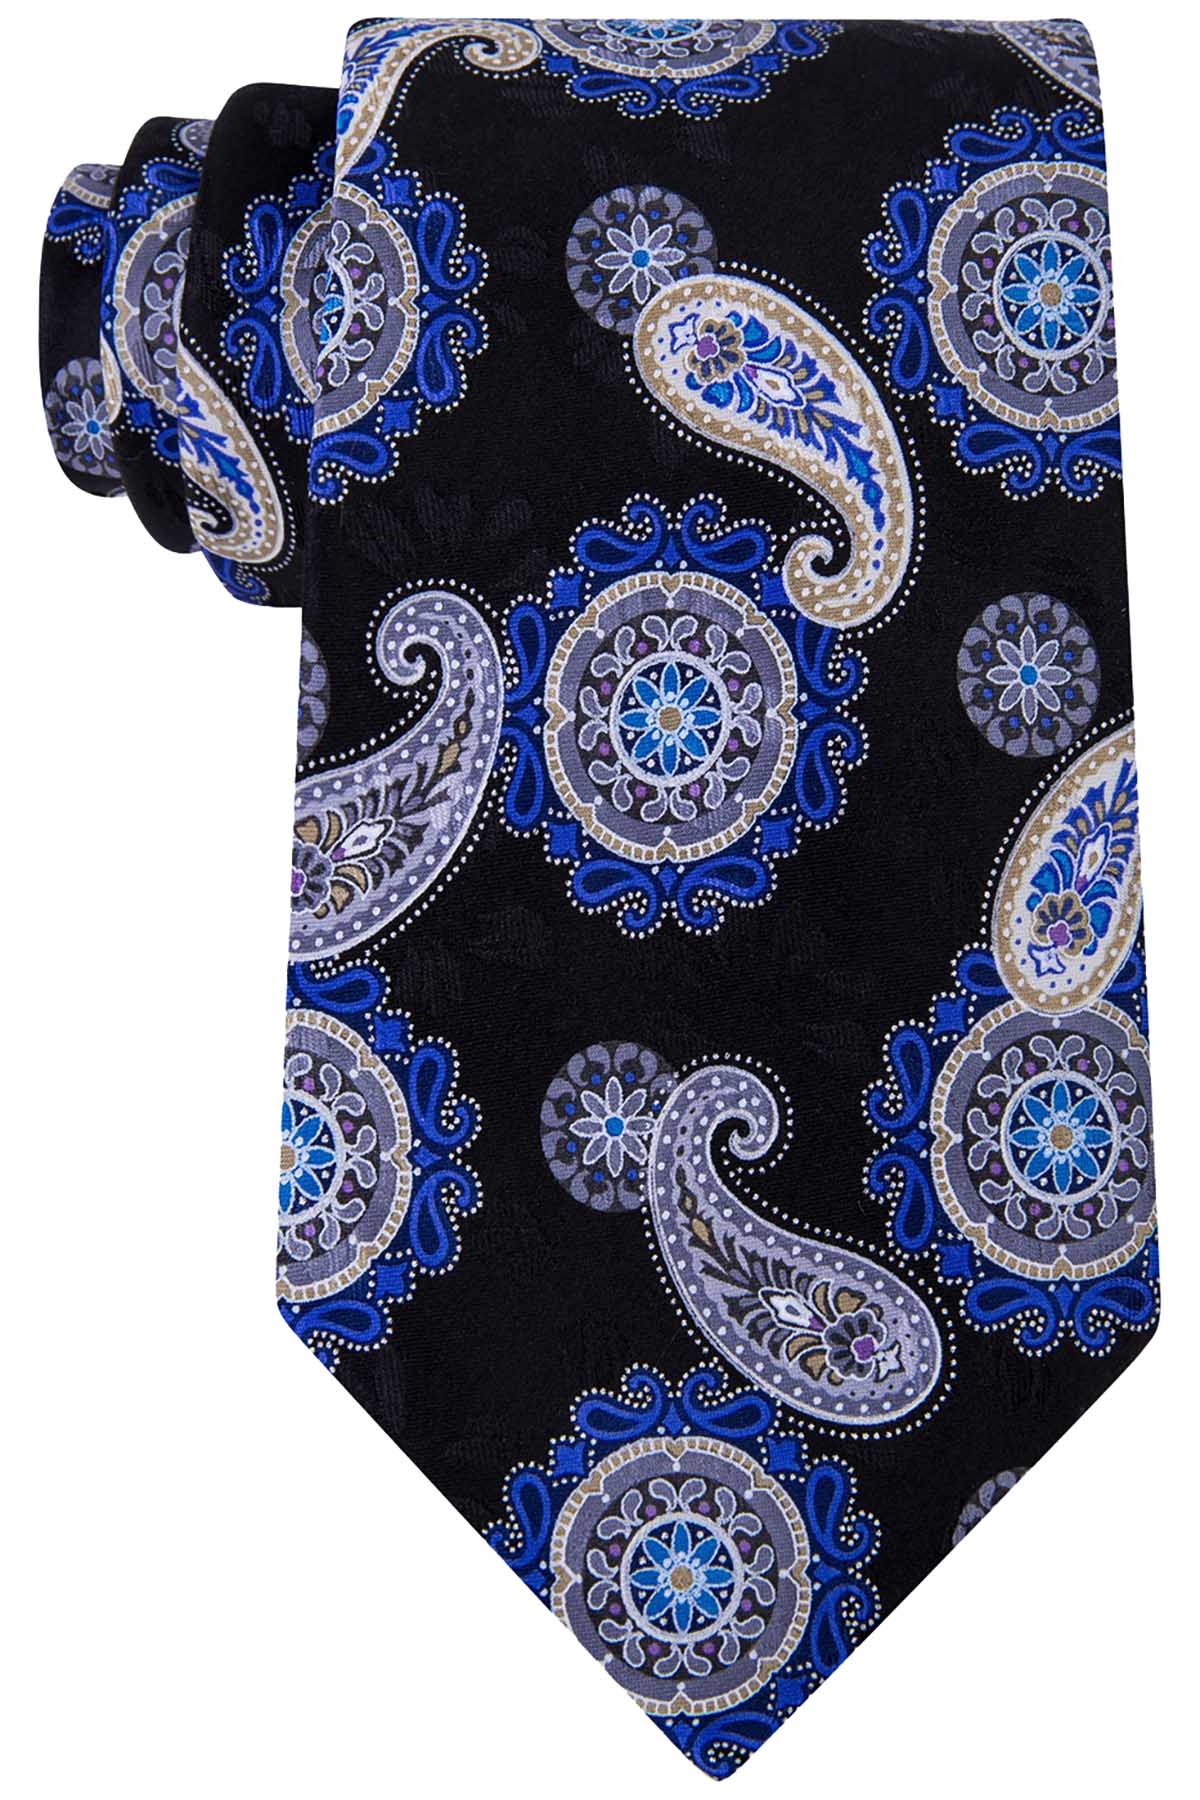 Geoffrey Beene Black/Blue Paisley Medallion Tie